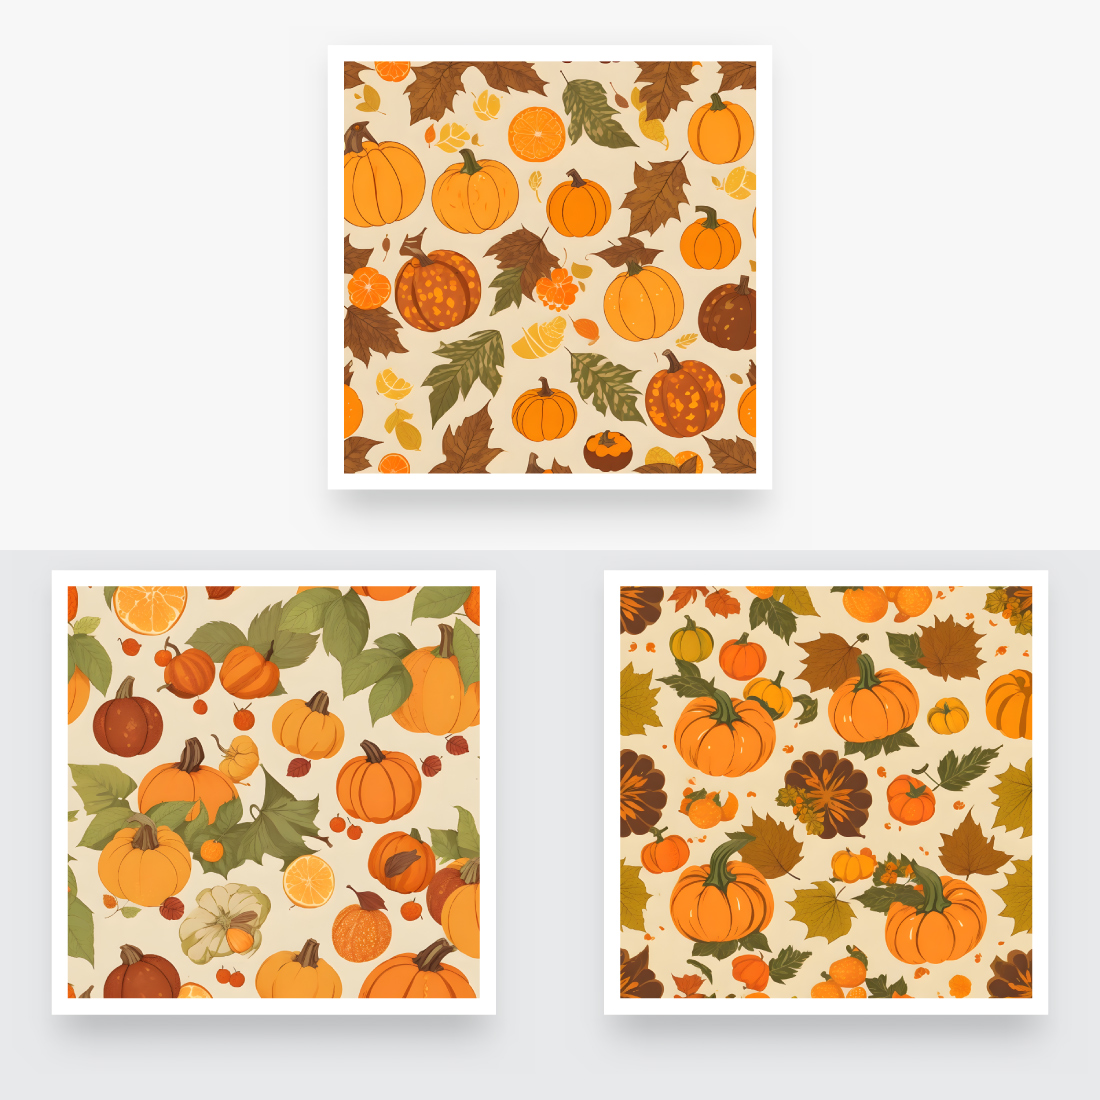 Autumn Pumpkins fruits Pattern preview image.